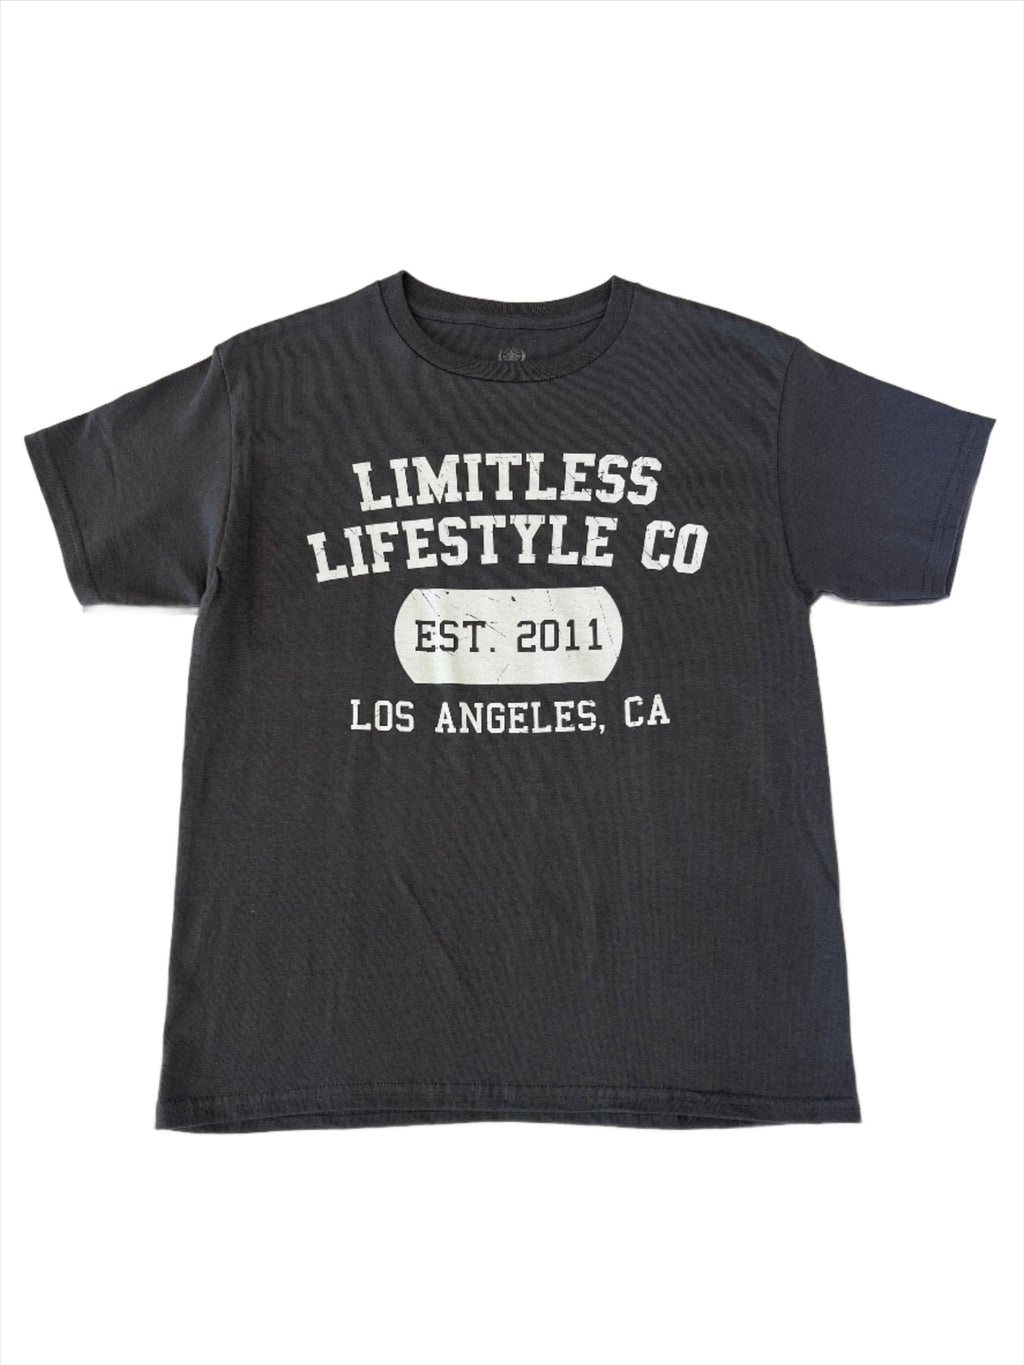 Limitless "Property" Kids T-shirt (Slate)